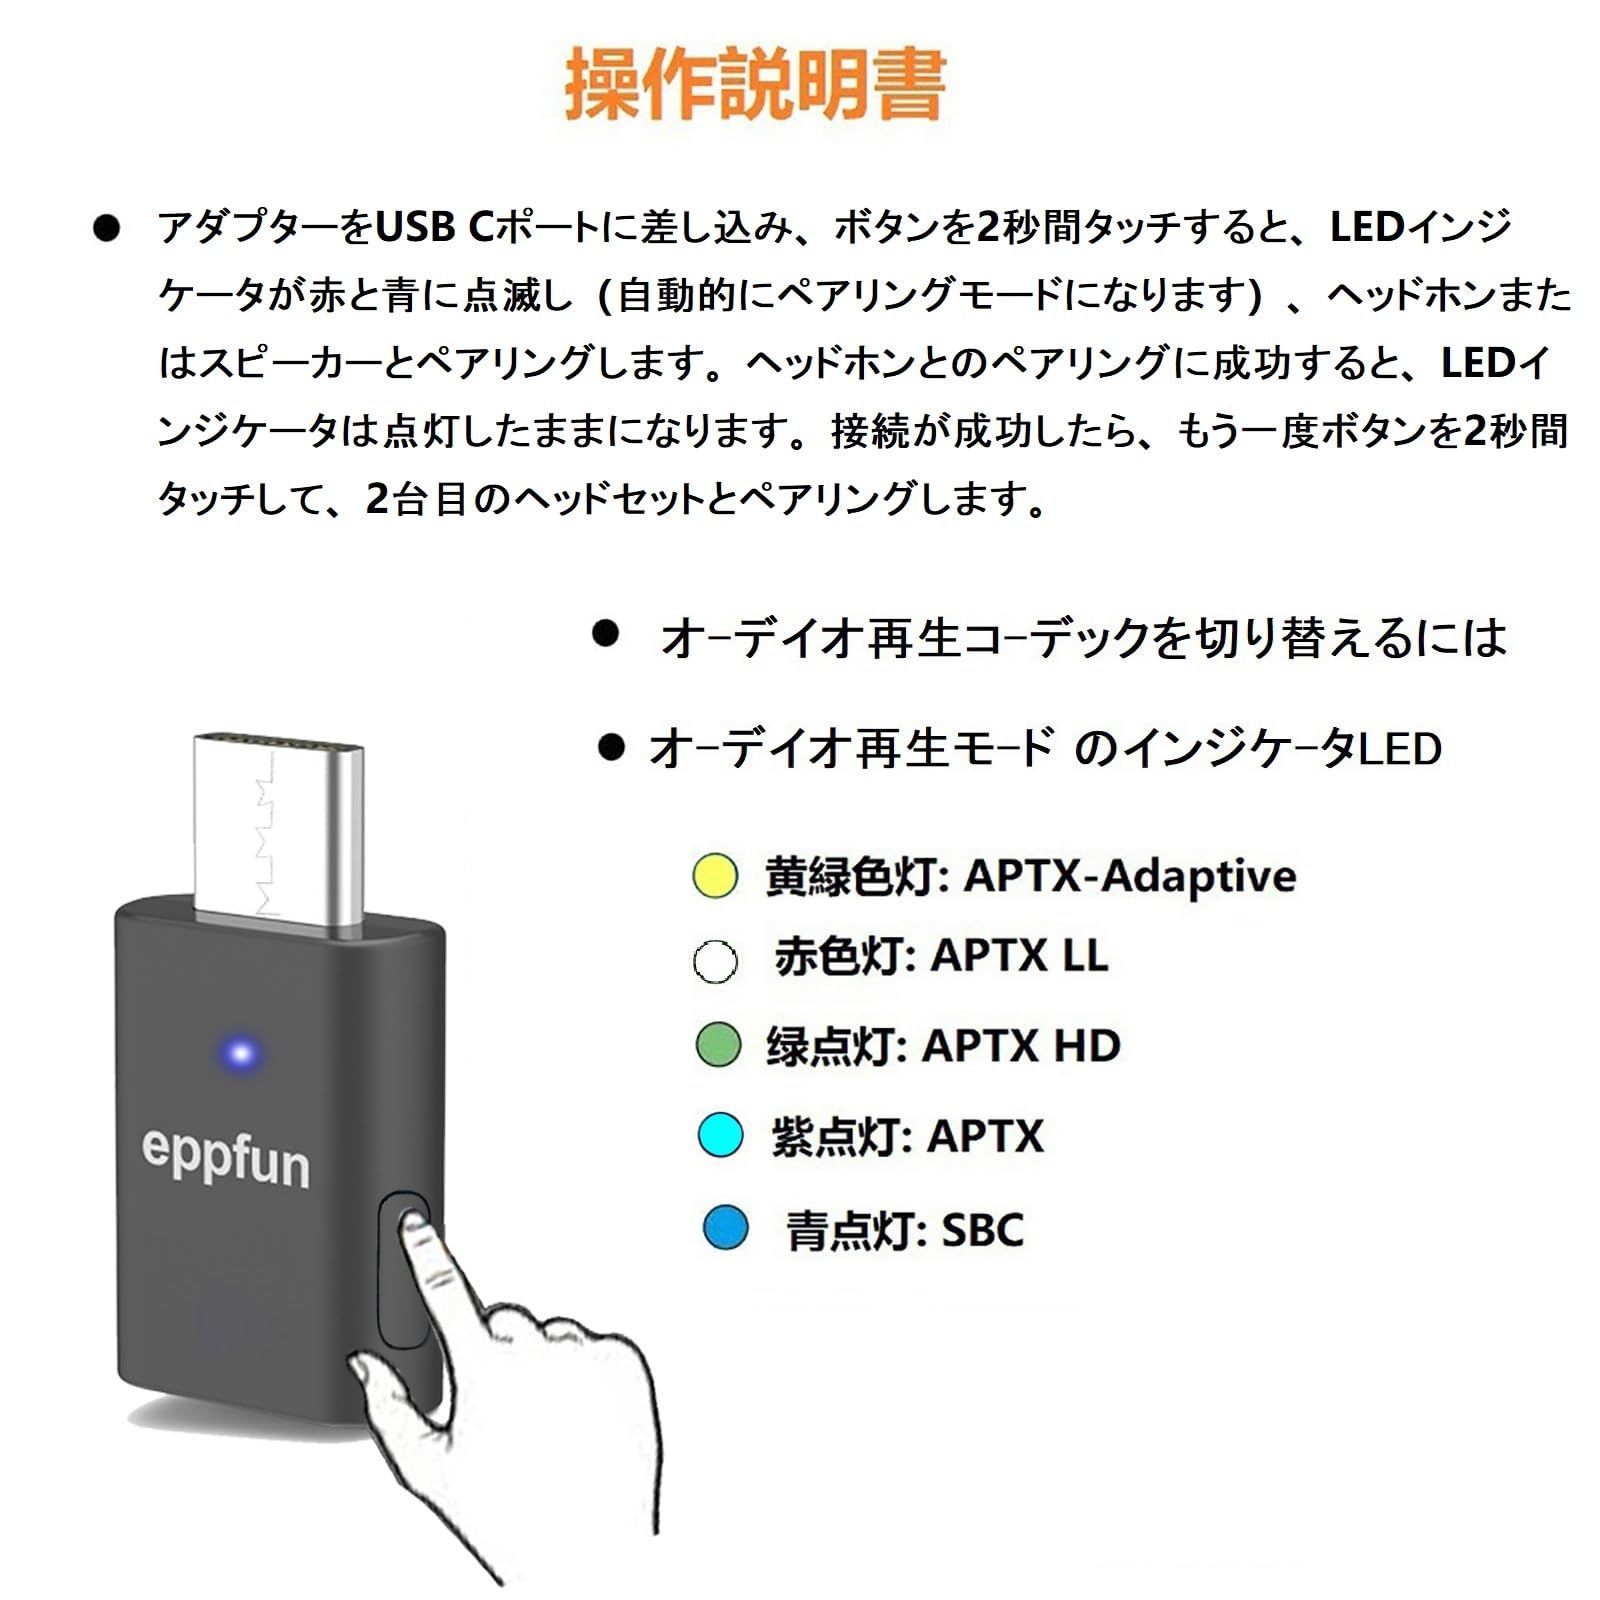 eppfun PS5 Nintendo Switch PC USB-C Bluetooth 5.2 aptX-Adaptiveトランスミッター 